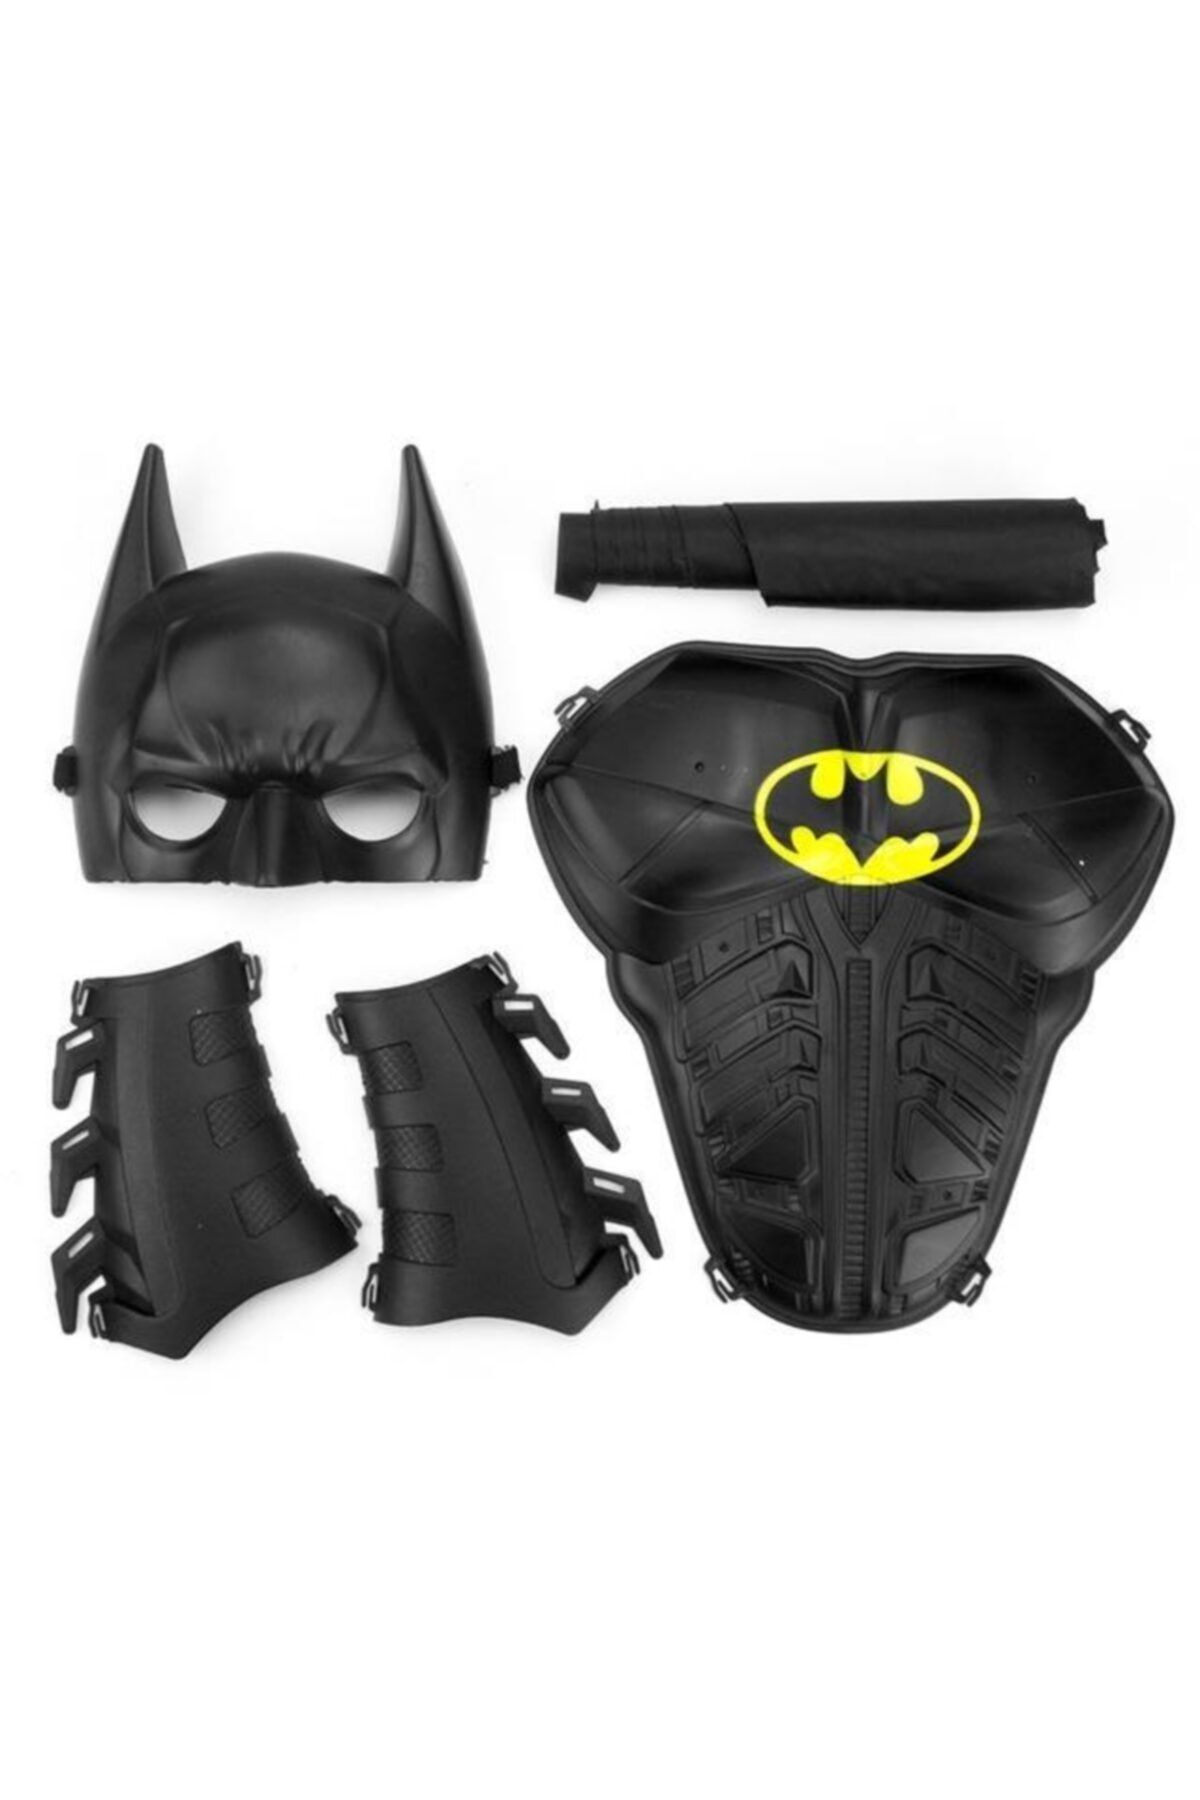 Mashotrend Batman Maske Kalkan Bileklik Pelerinli Set - Batman Kostüm Aksesuarı